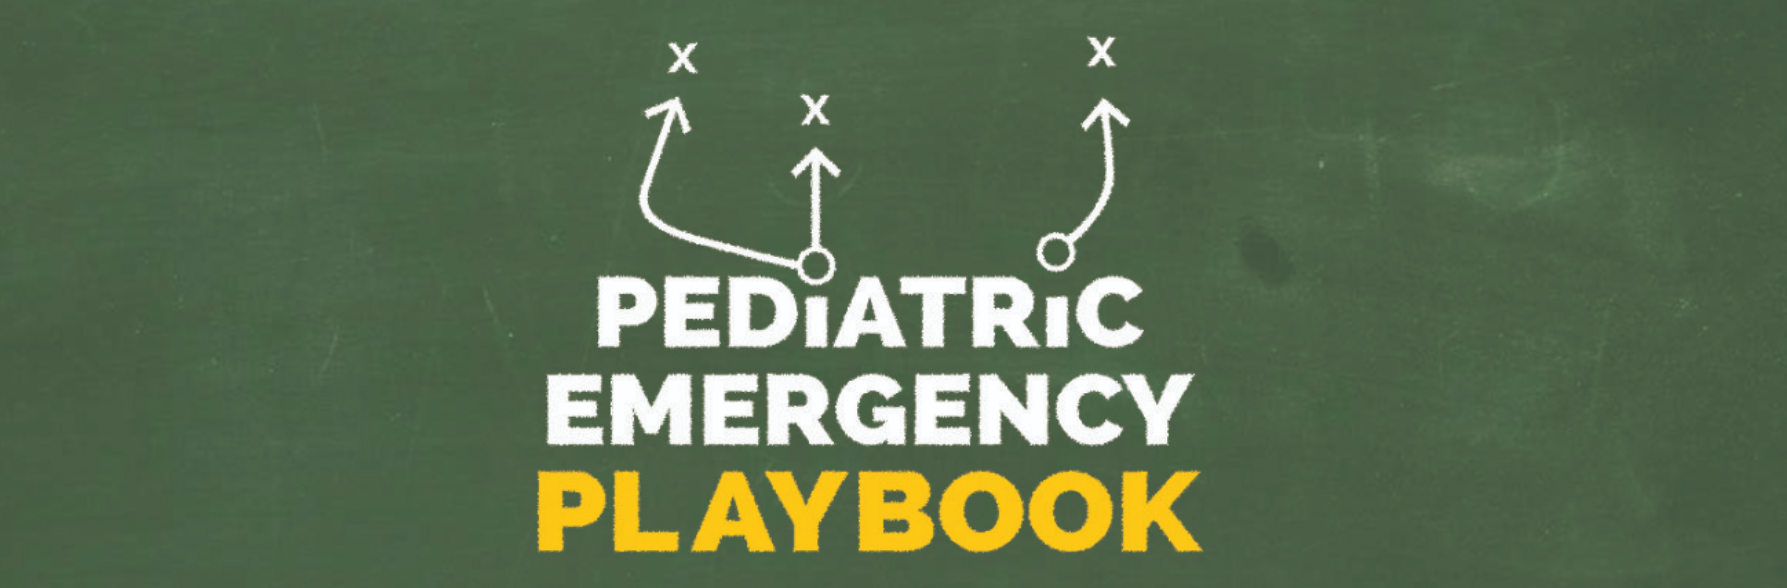 Pediatric Emergency Playbook logo